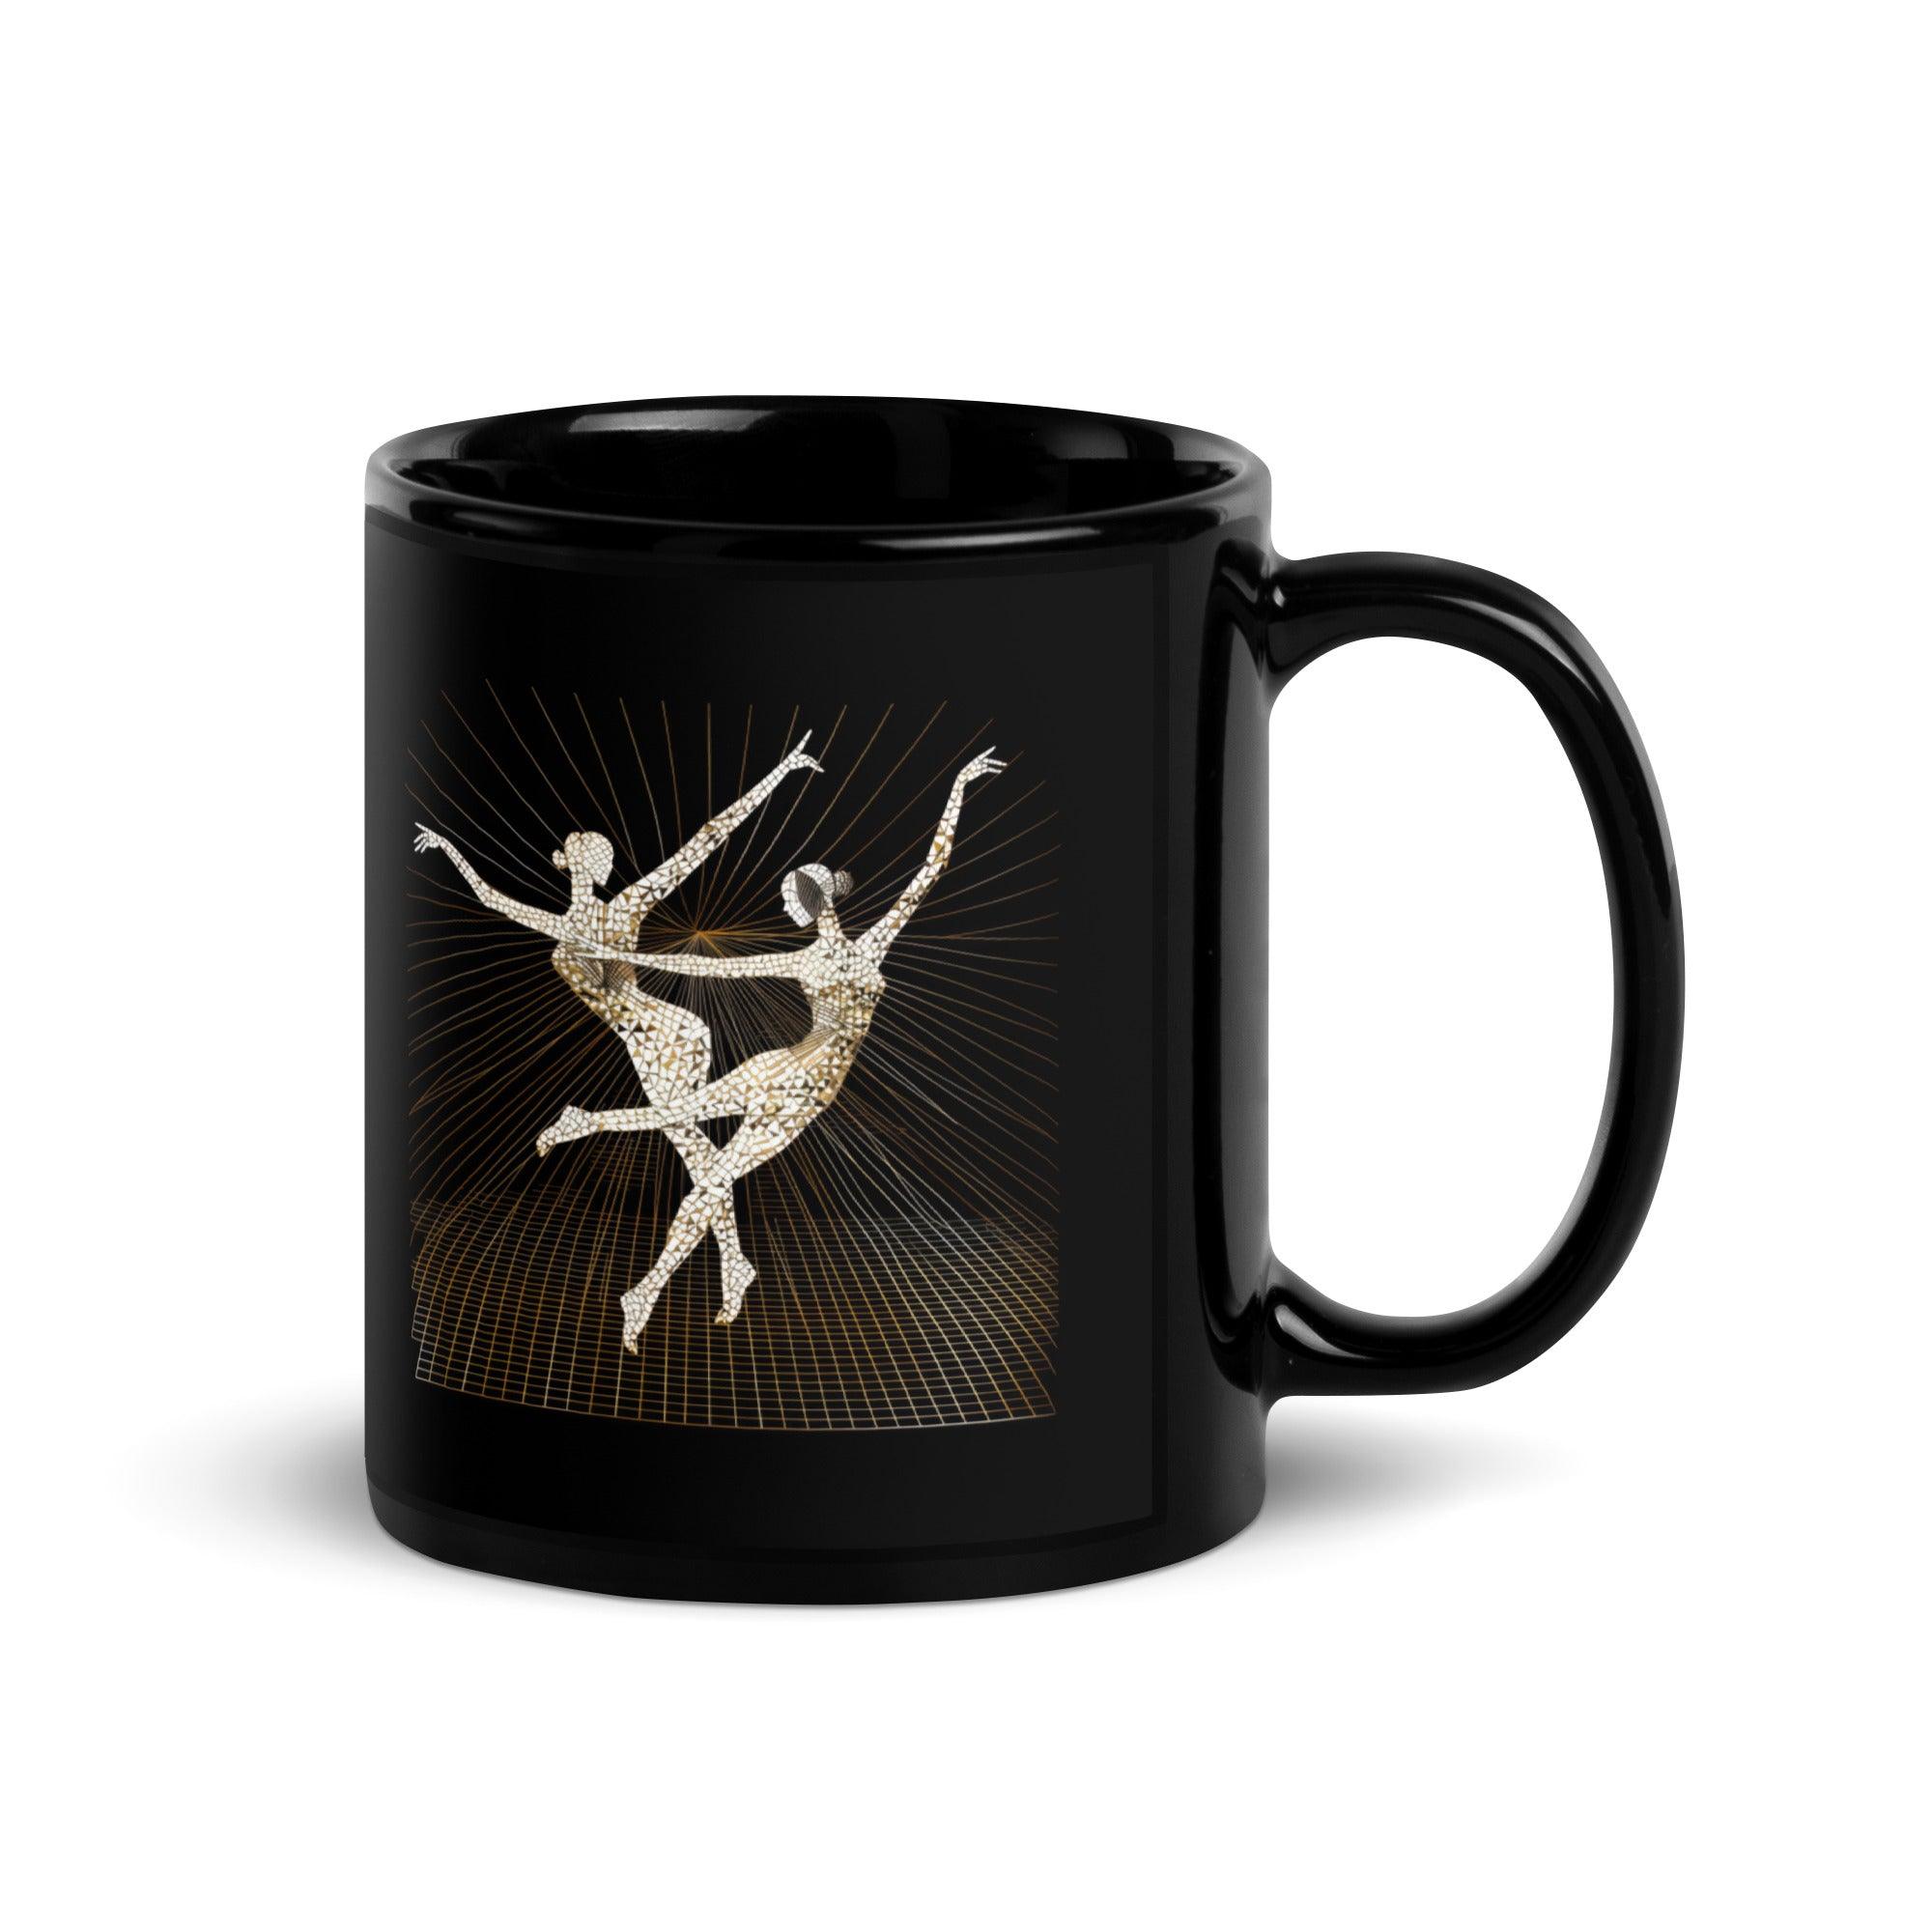 Elegant black glossy mug with feminine dance motion design